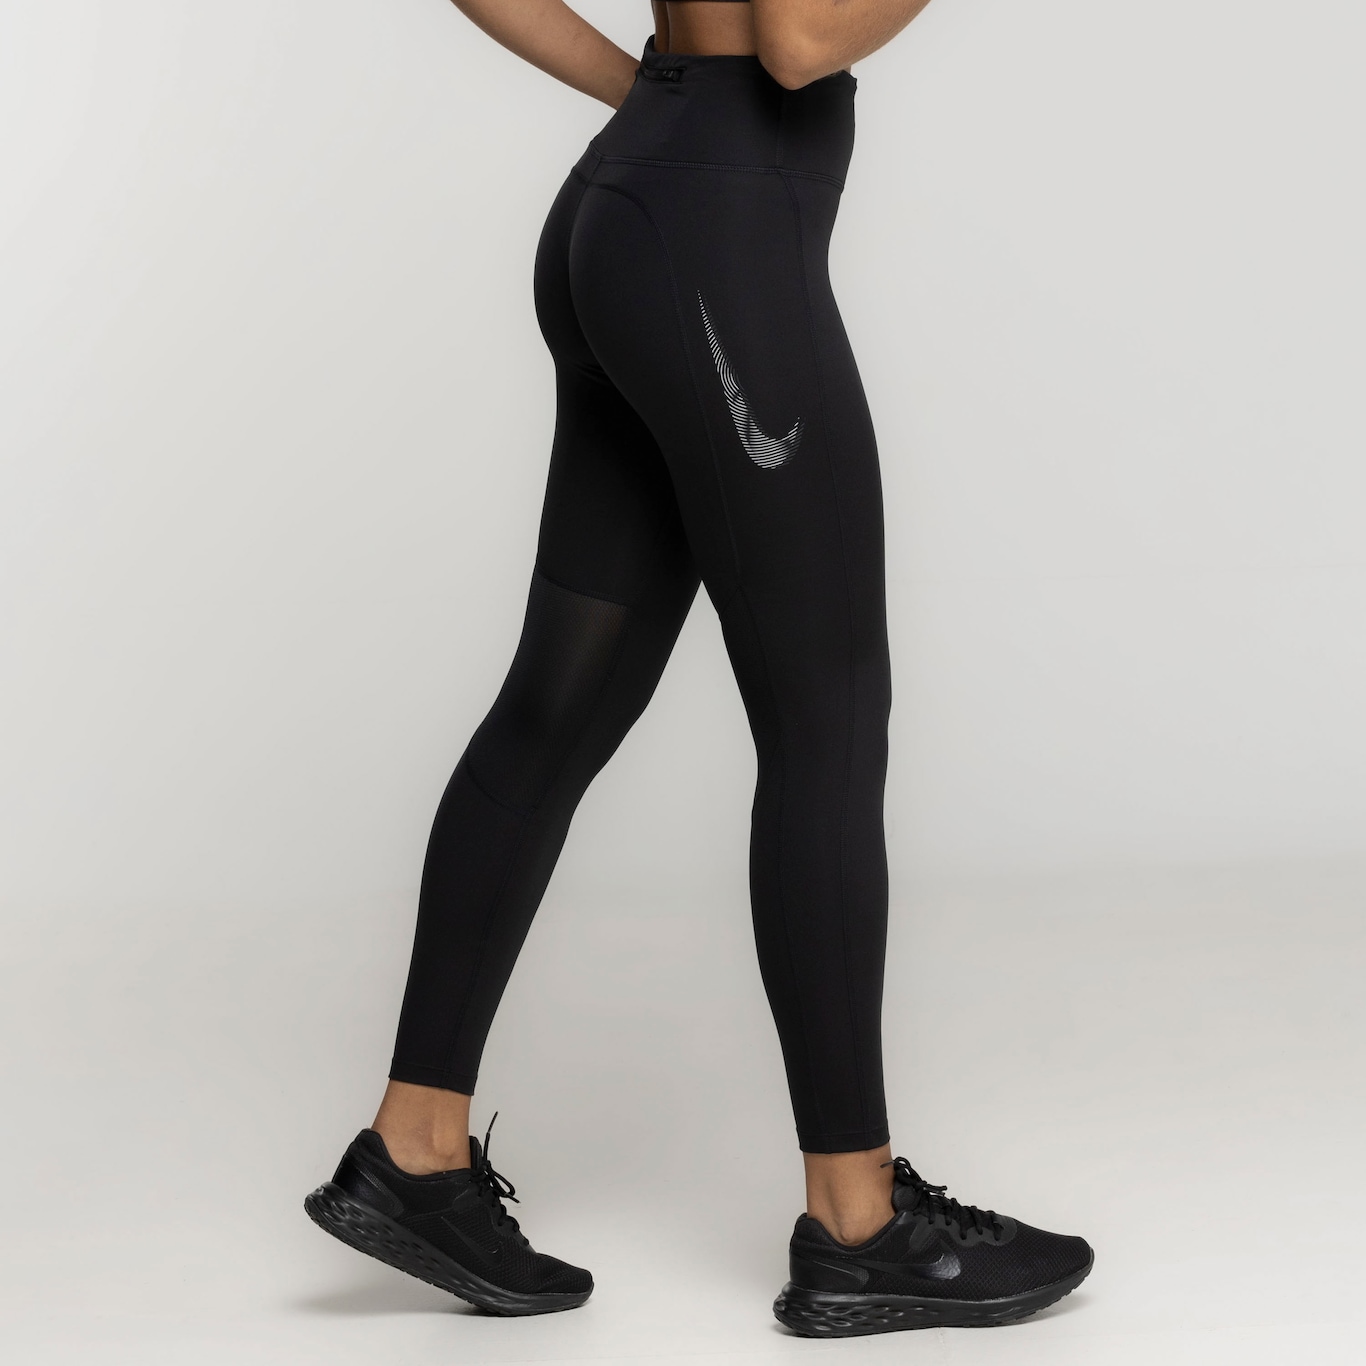 Calça Legging Feminina Nike Dri-Fit 7/8 Tight FST MR SW HBR em Promoção